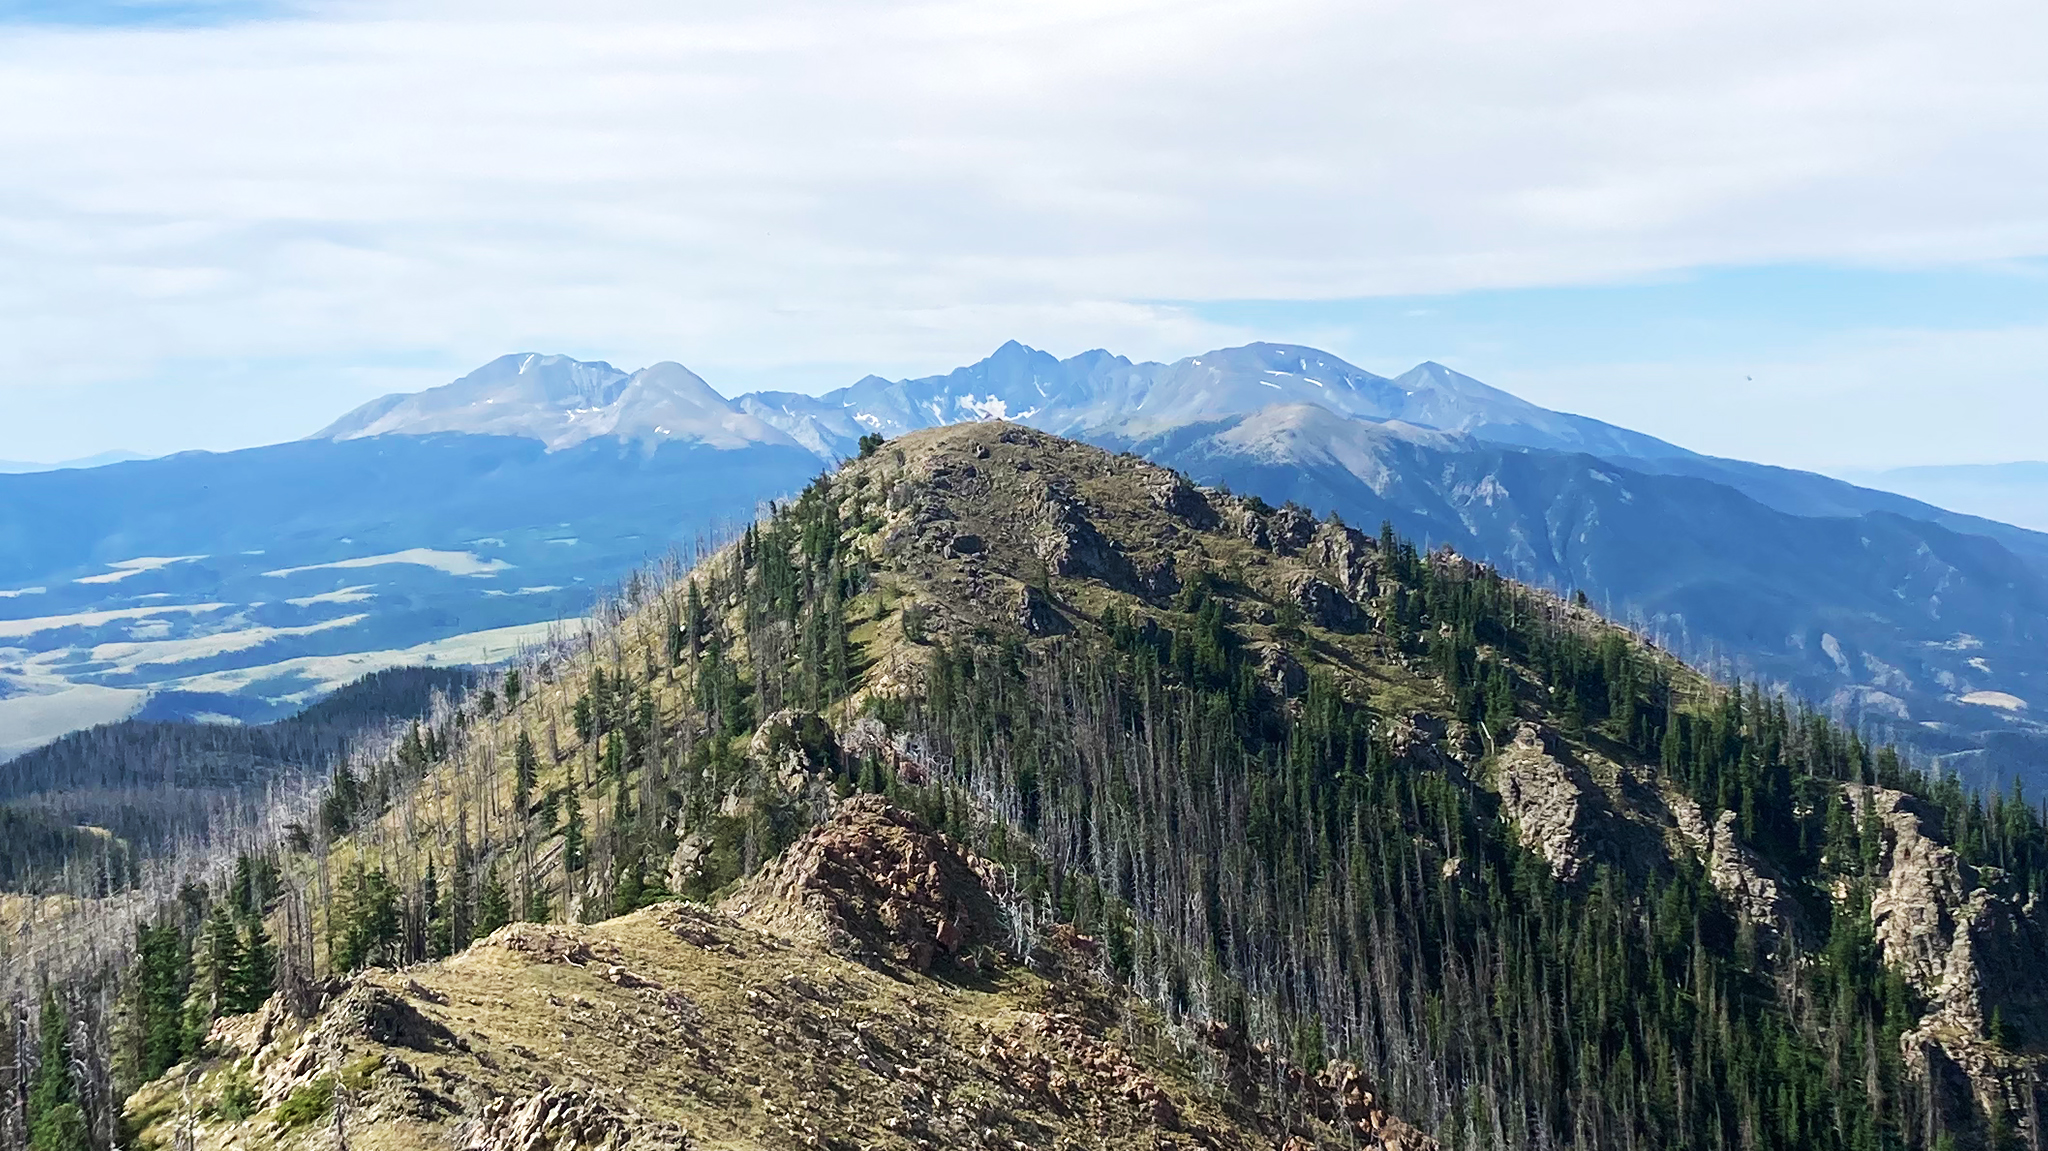 Mount Zwischen with the Sierra Blanca Massif awaiting in the background